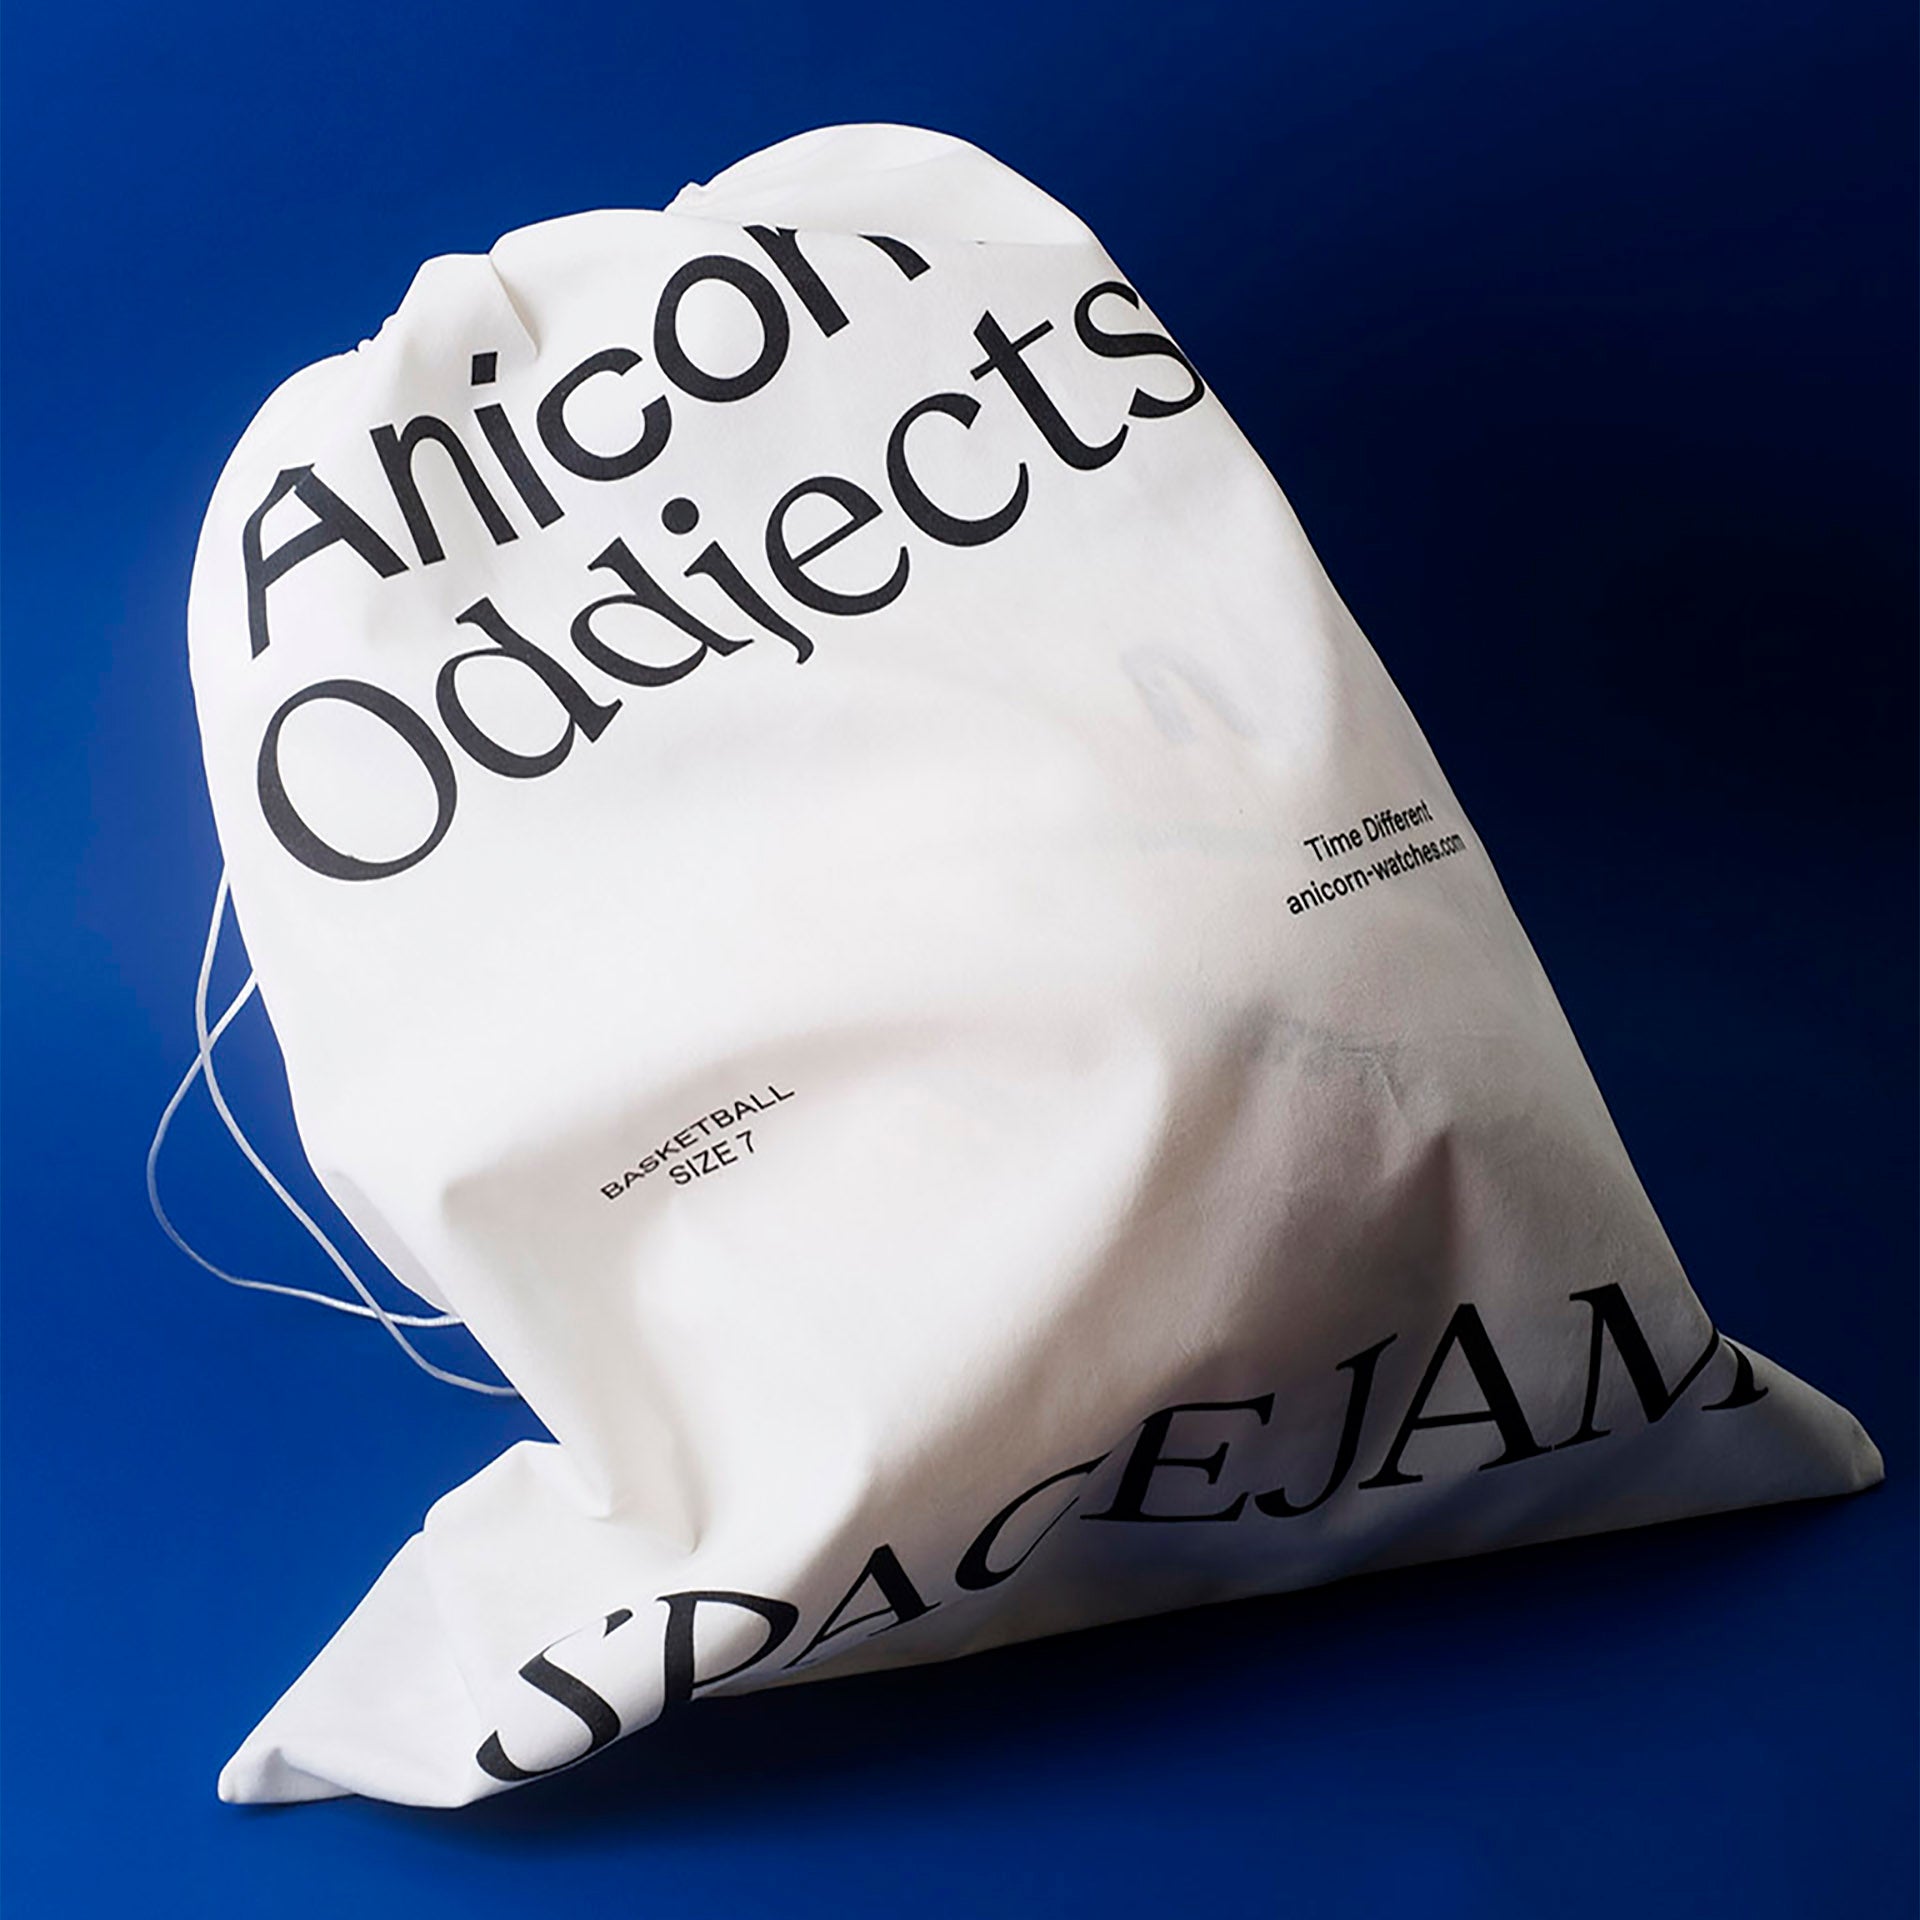 ANICORN Oddjects - Space Jam Premium Basketball